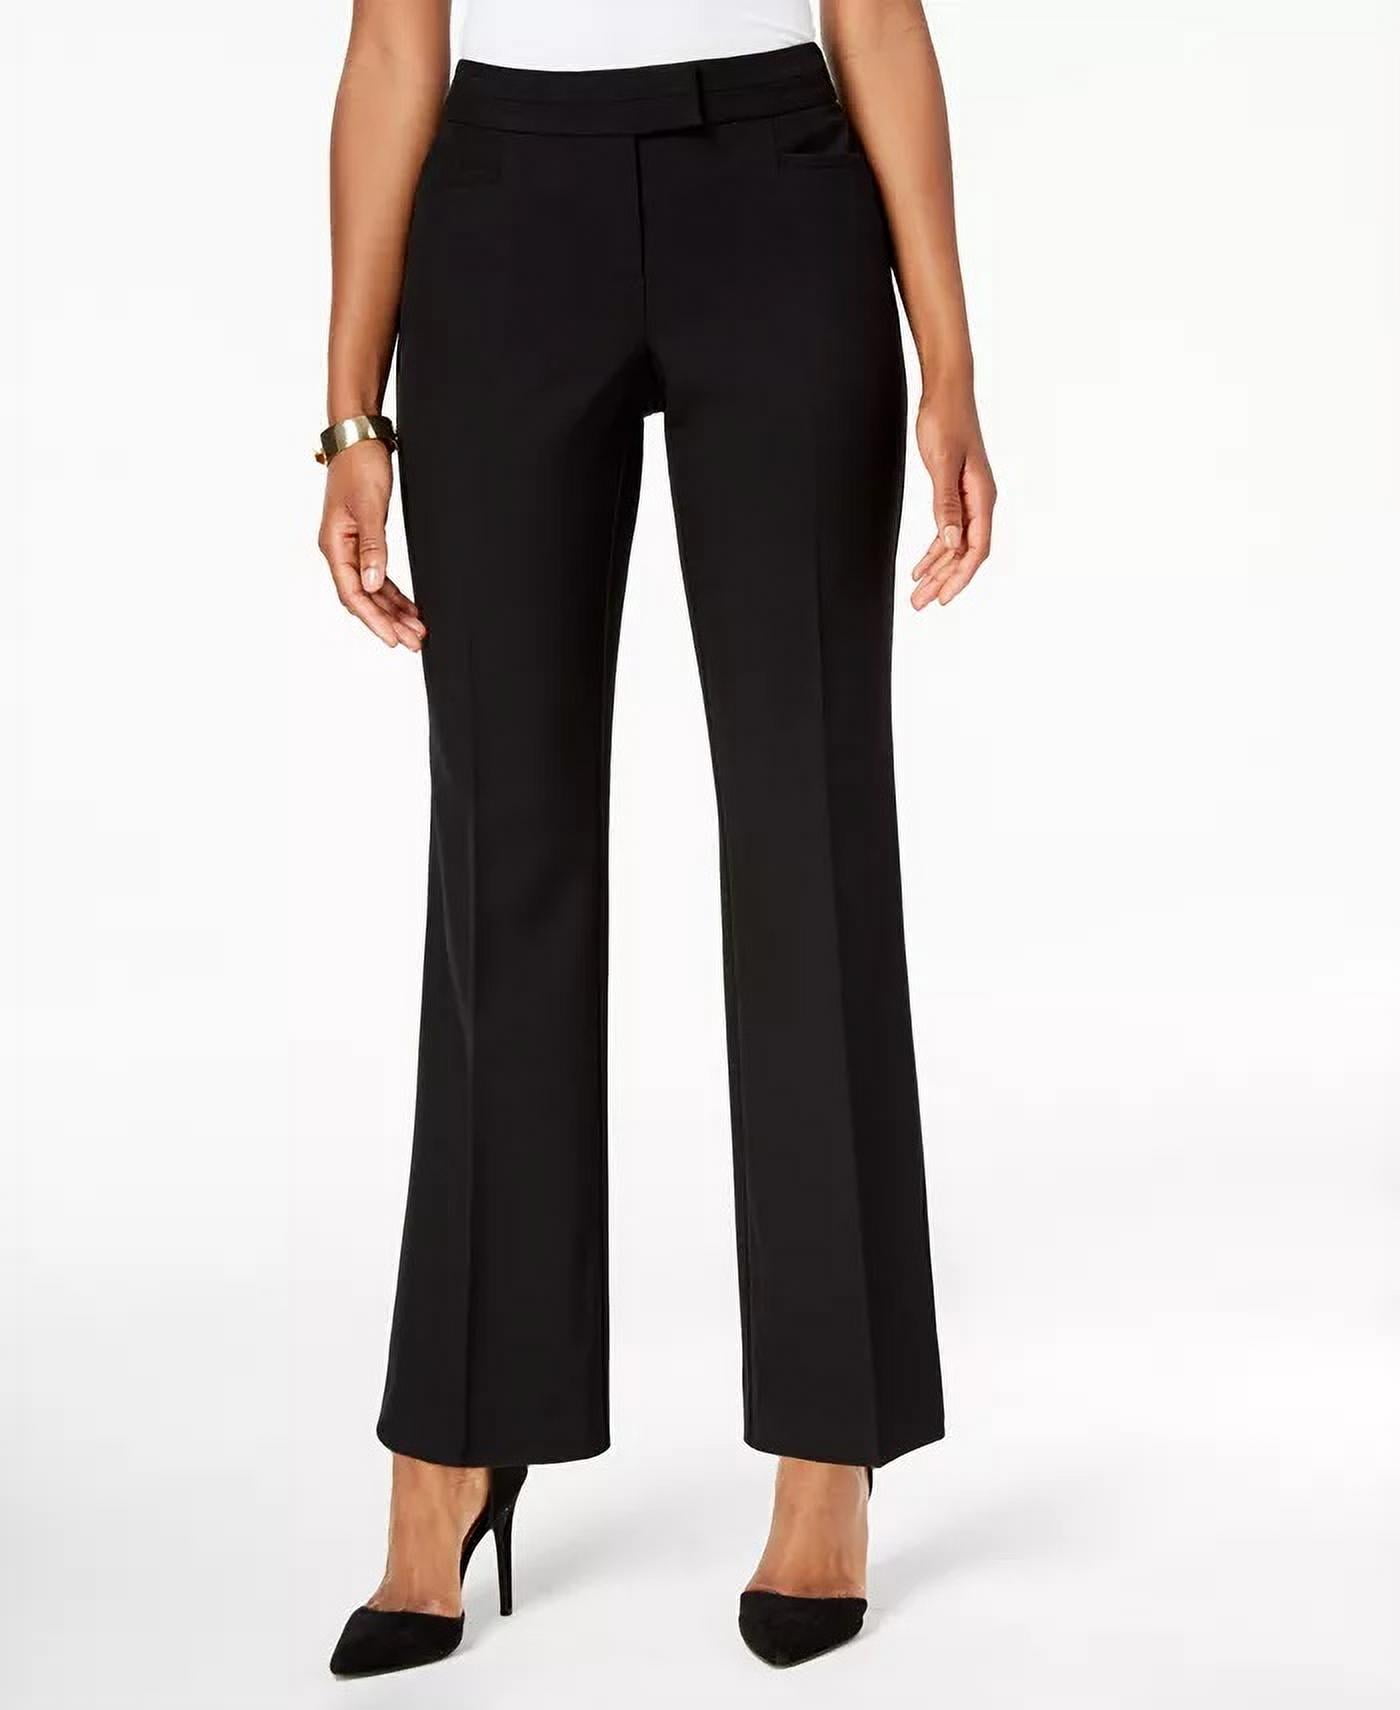 JM Collection Women's Extended Tab Trousers Black Size 22X5 - Walmart.com